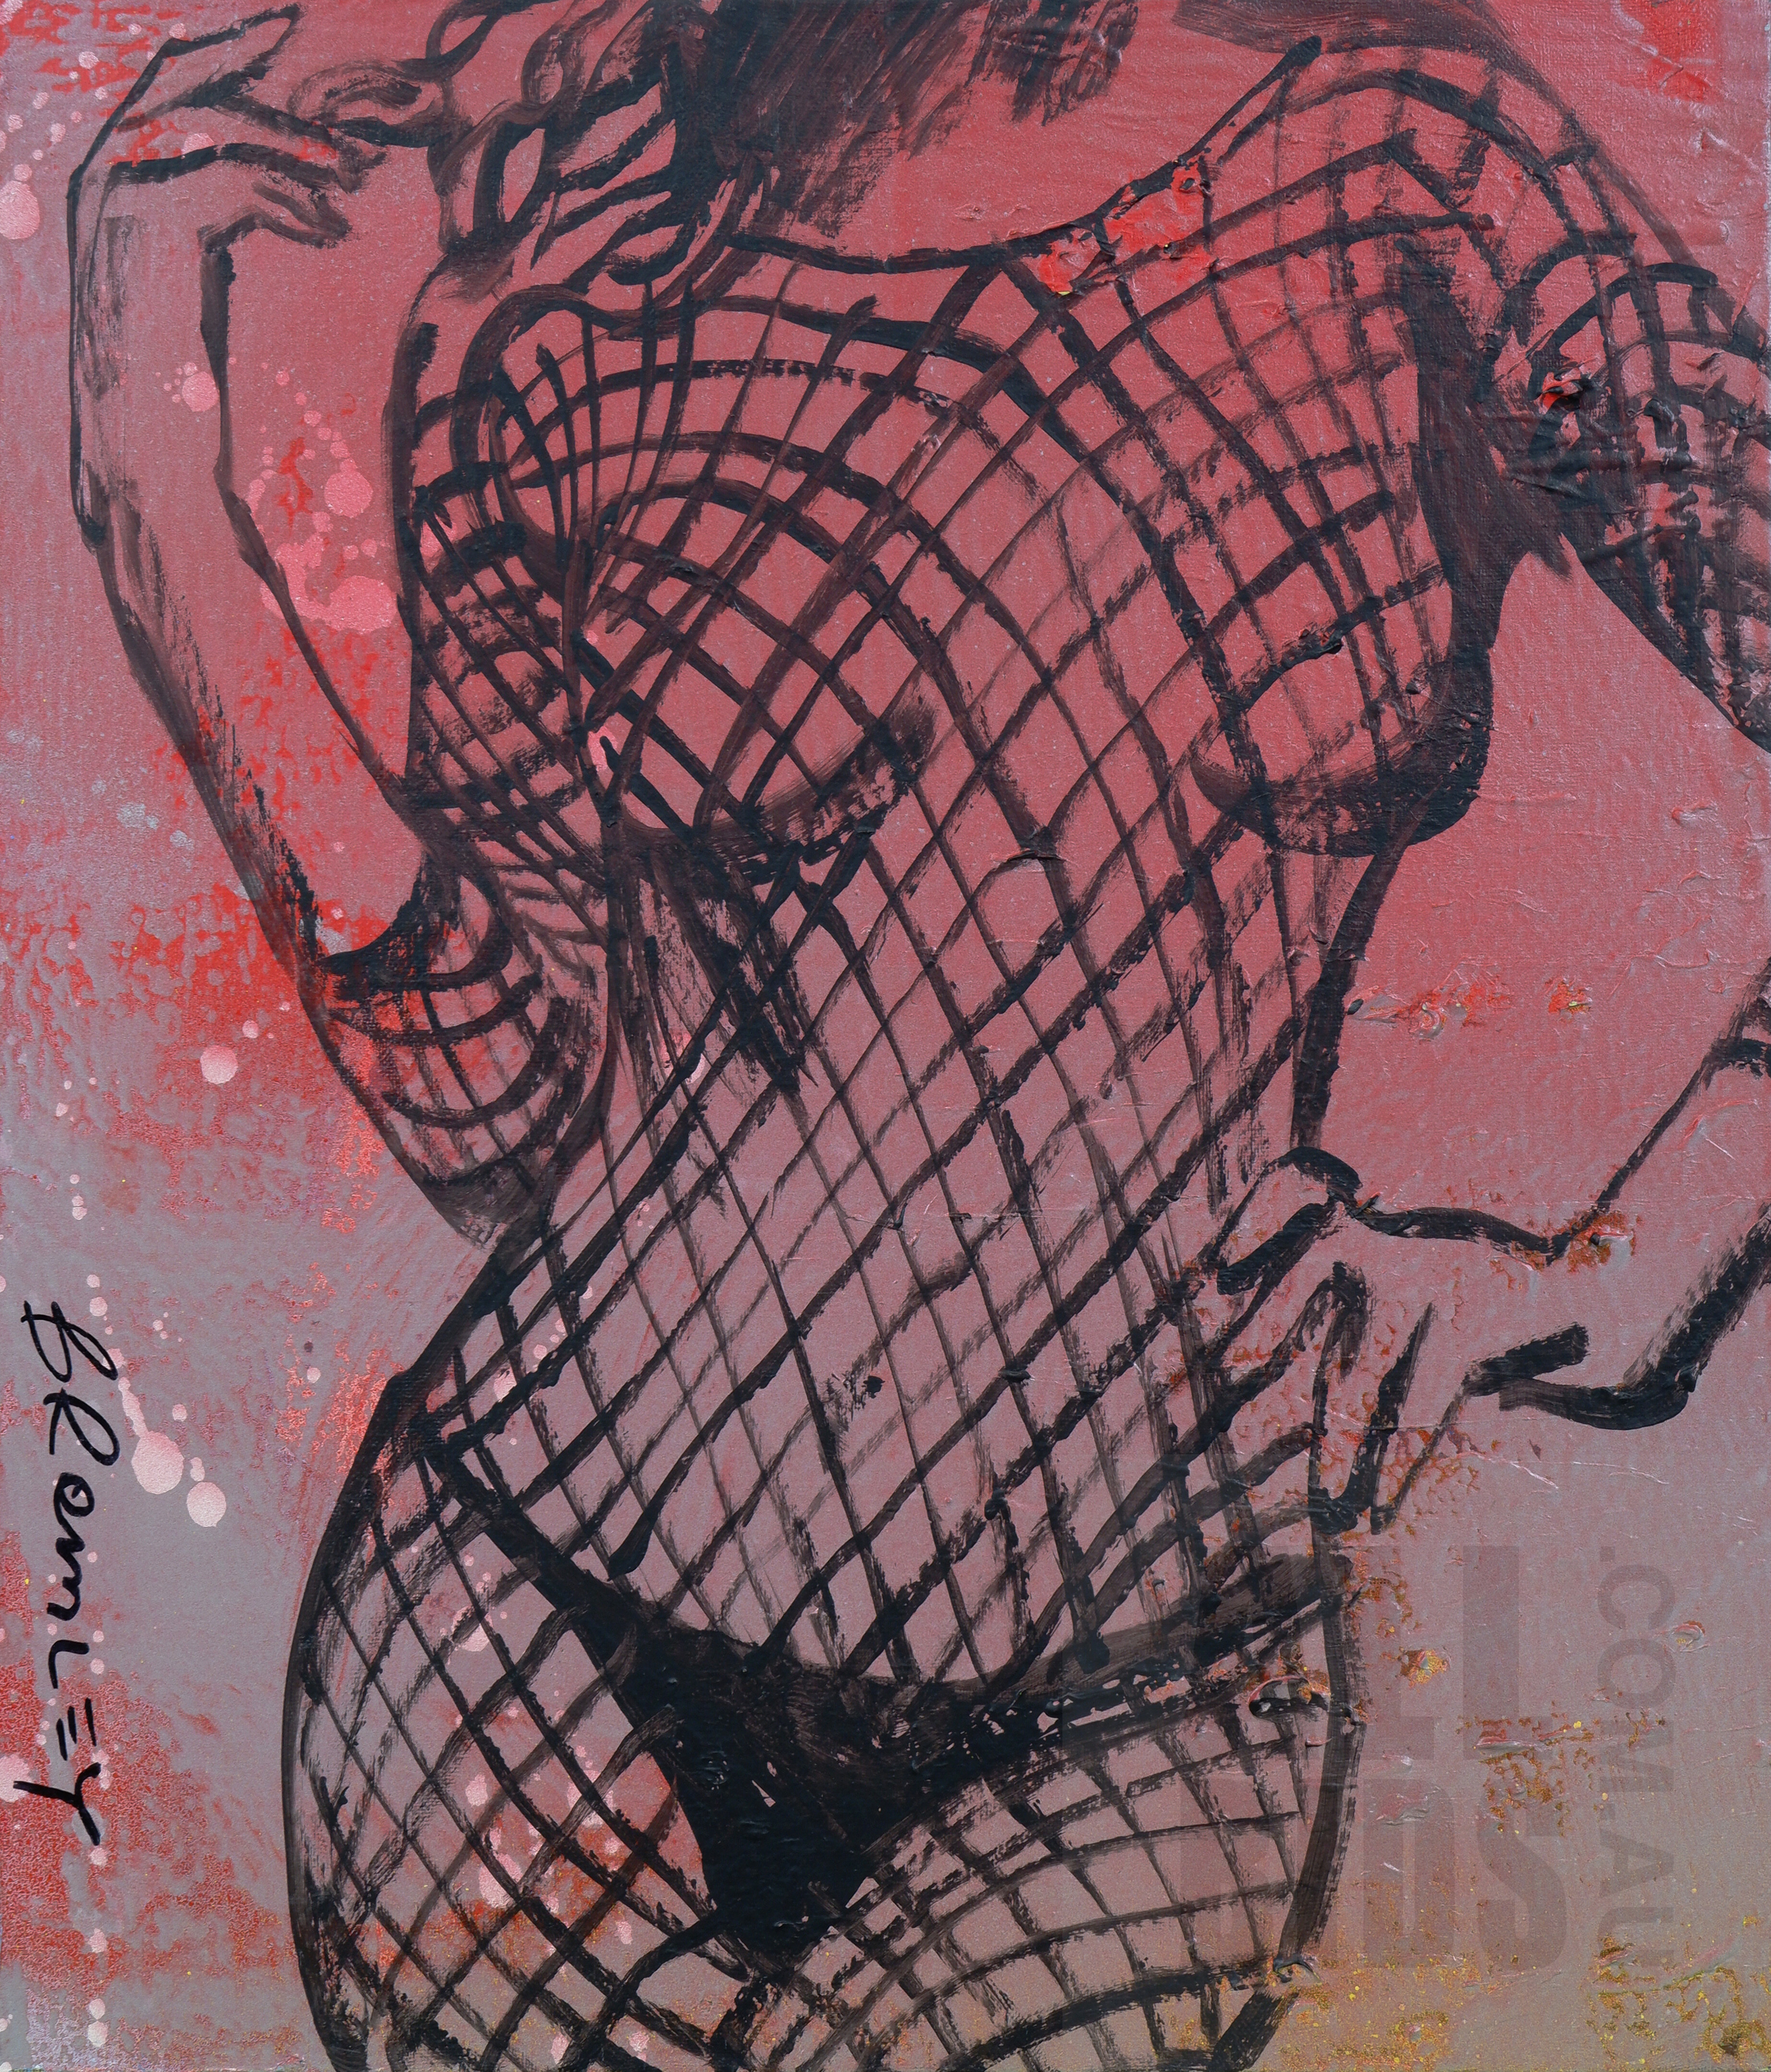 'David Bromley (born 1960), Fishnet Girl, Acrylic on Canvas, 53 x 46 cm'